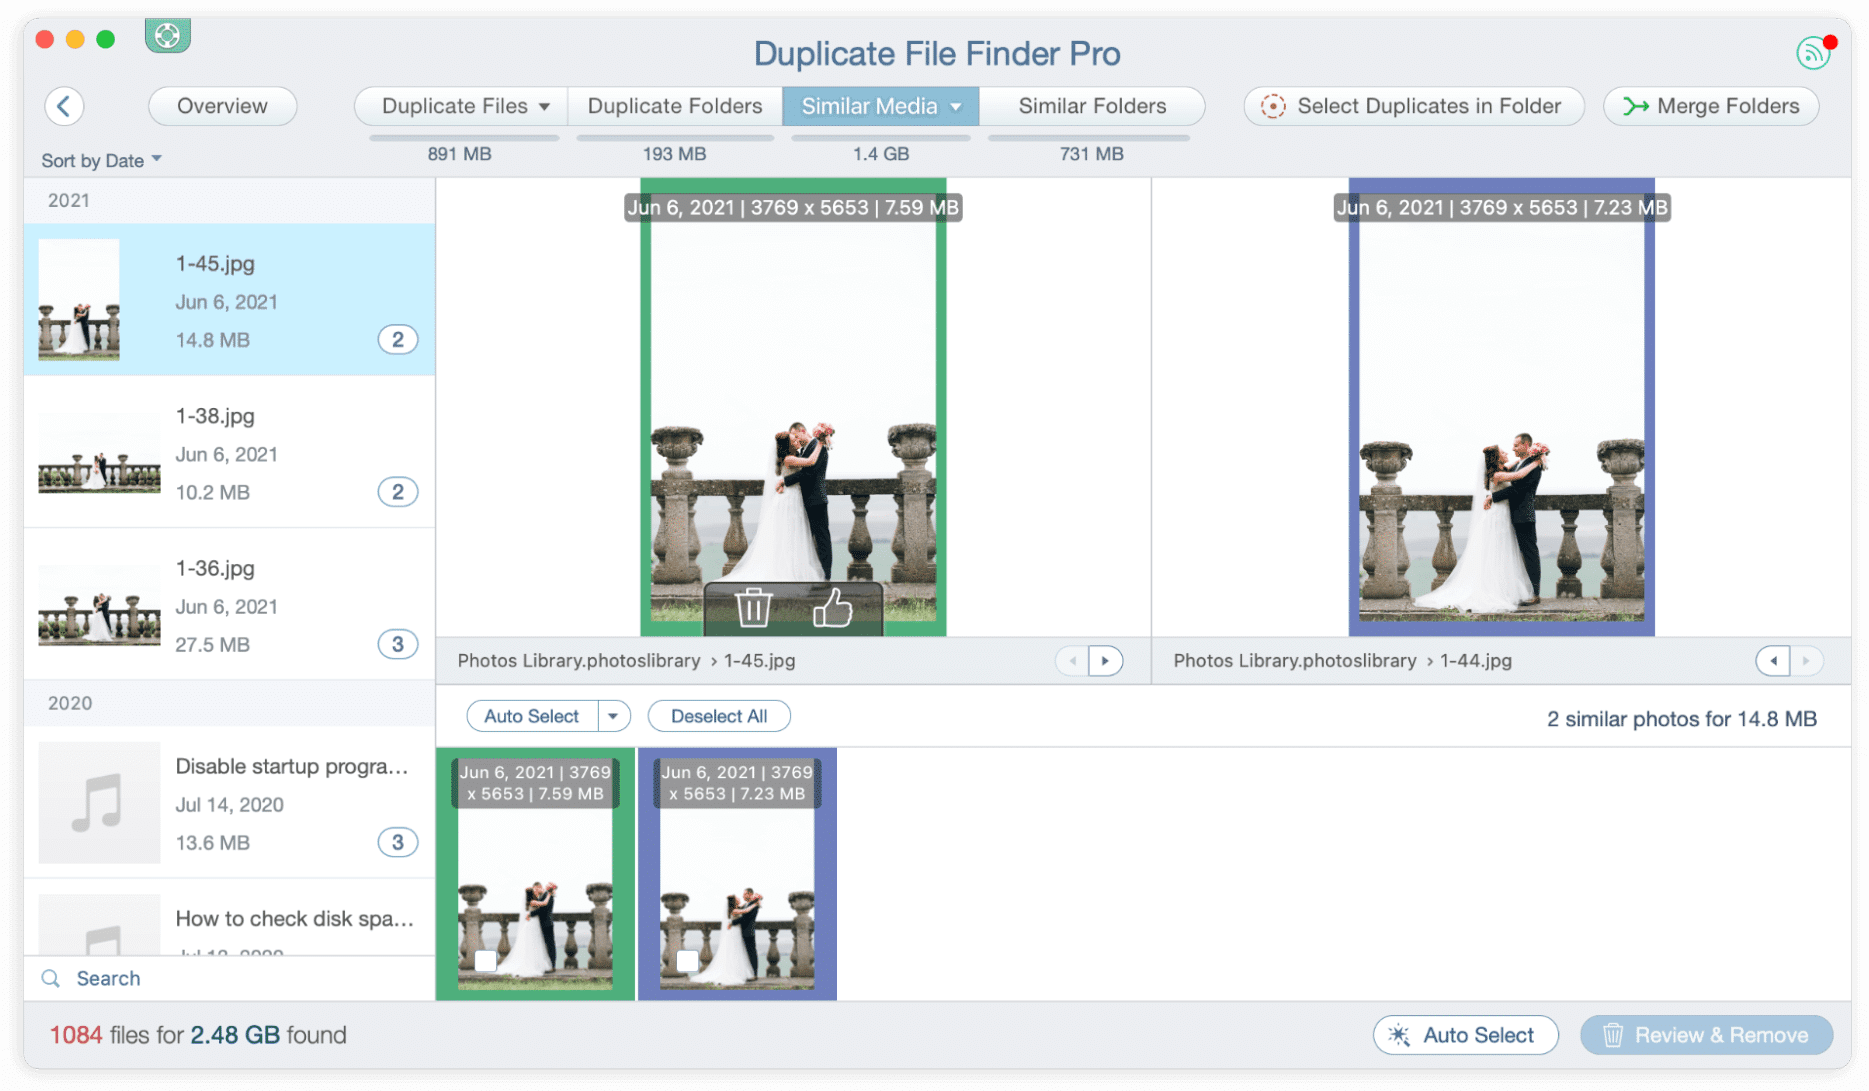 Similar Media section in Duplicate File Finder window